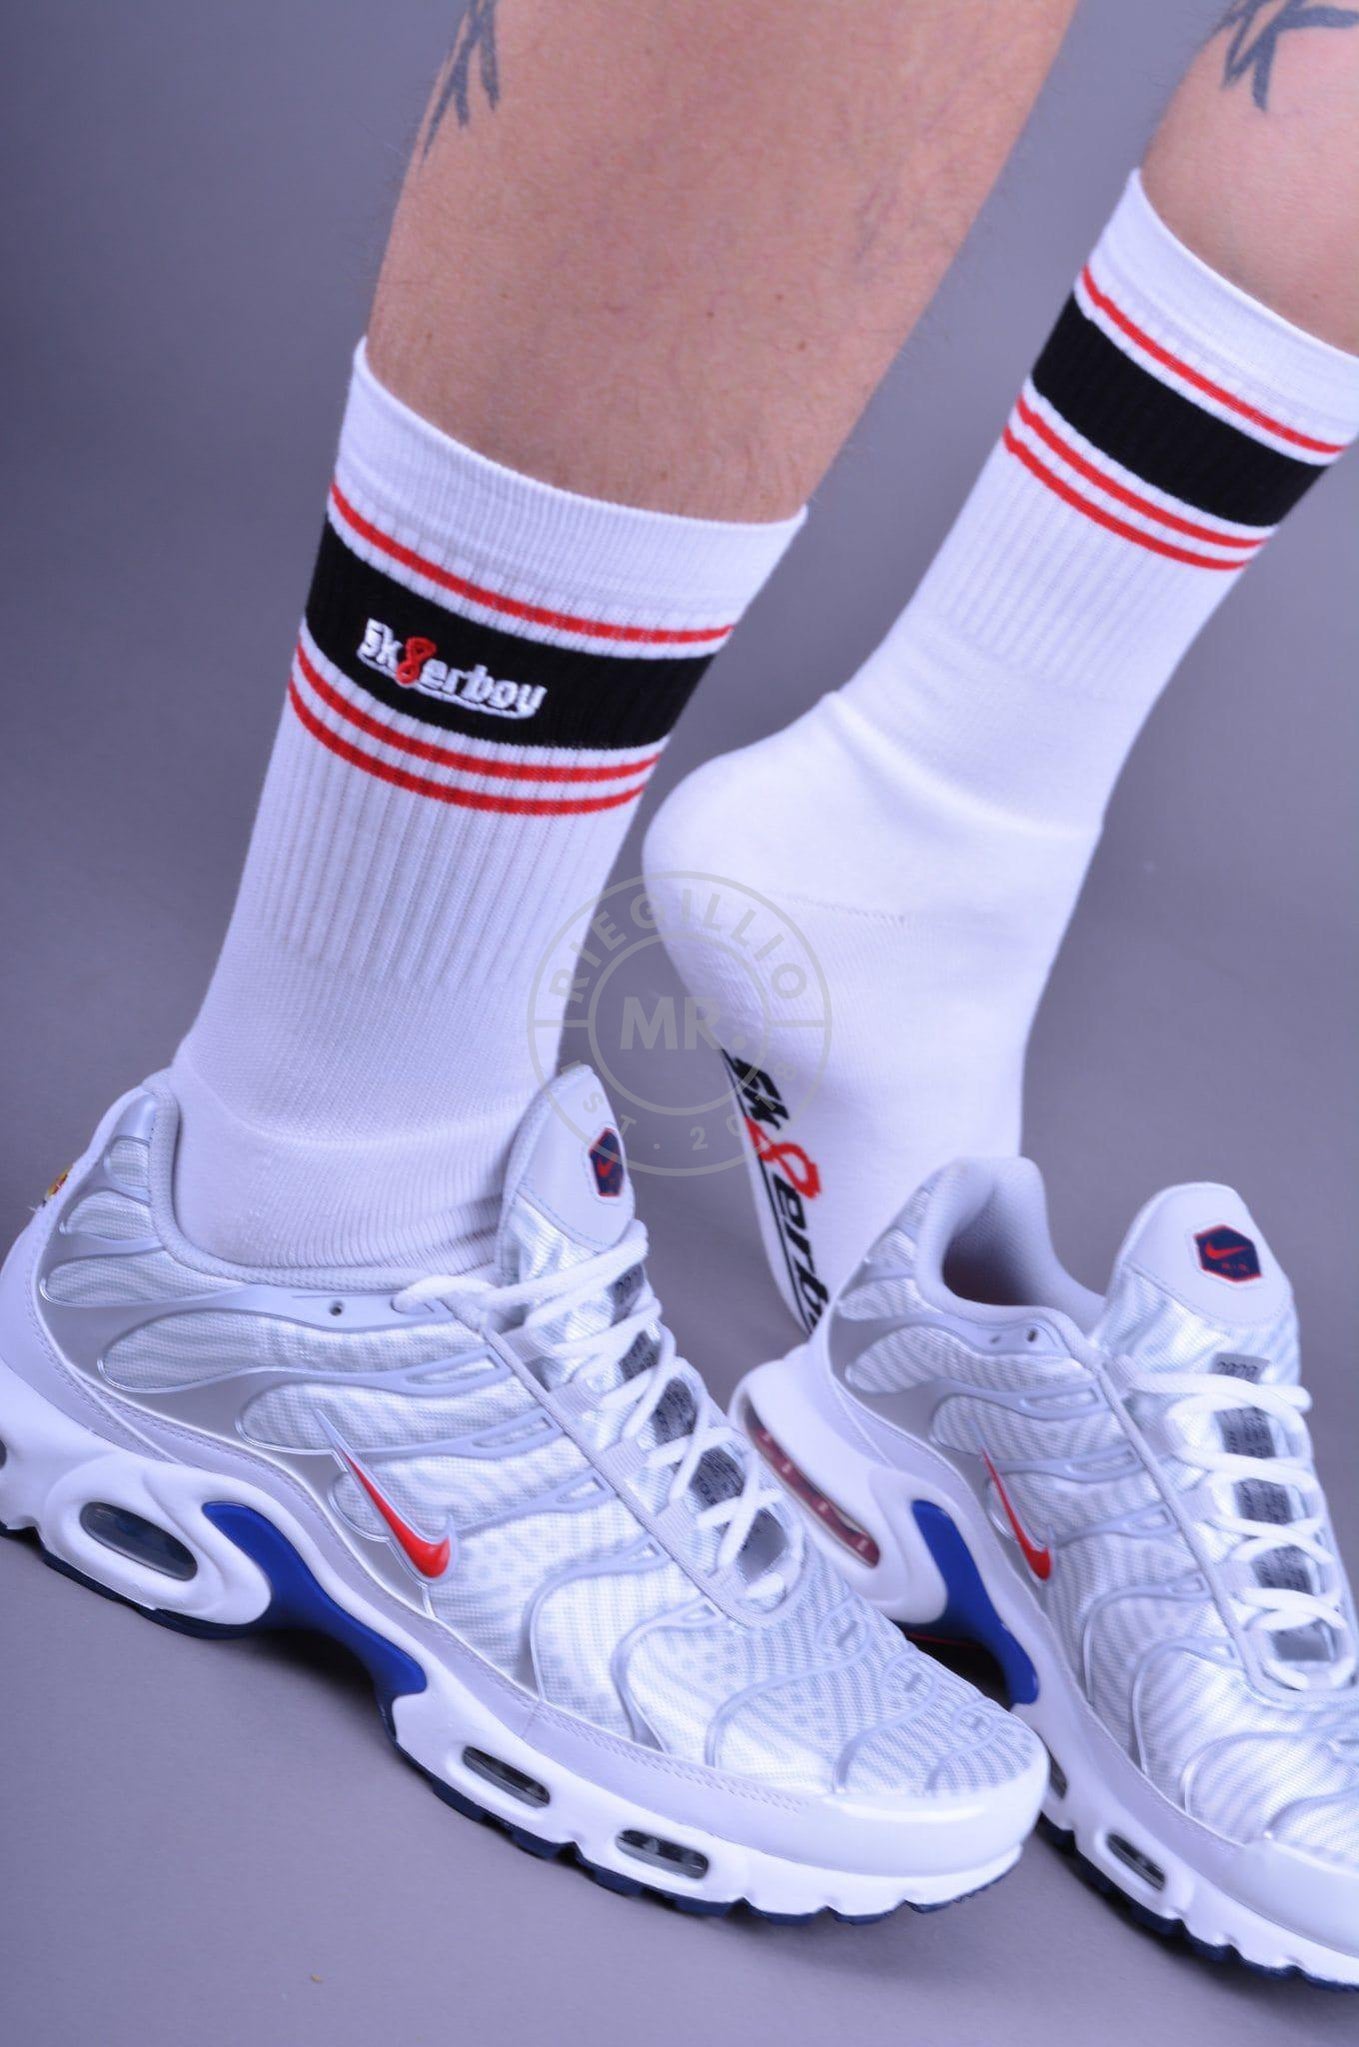 Sk8erboy Deluxe Socks Red-at MR. Riegillio